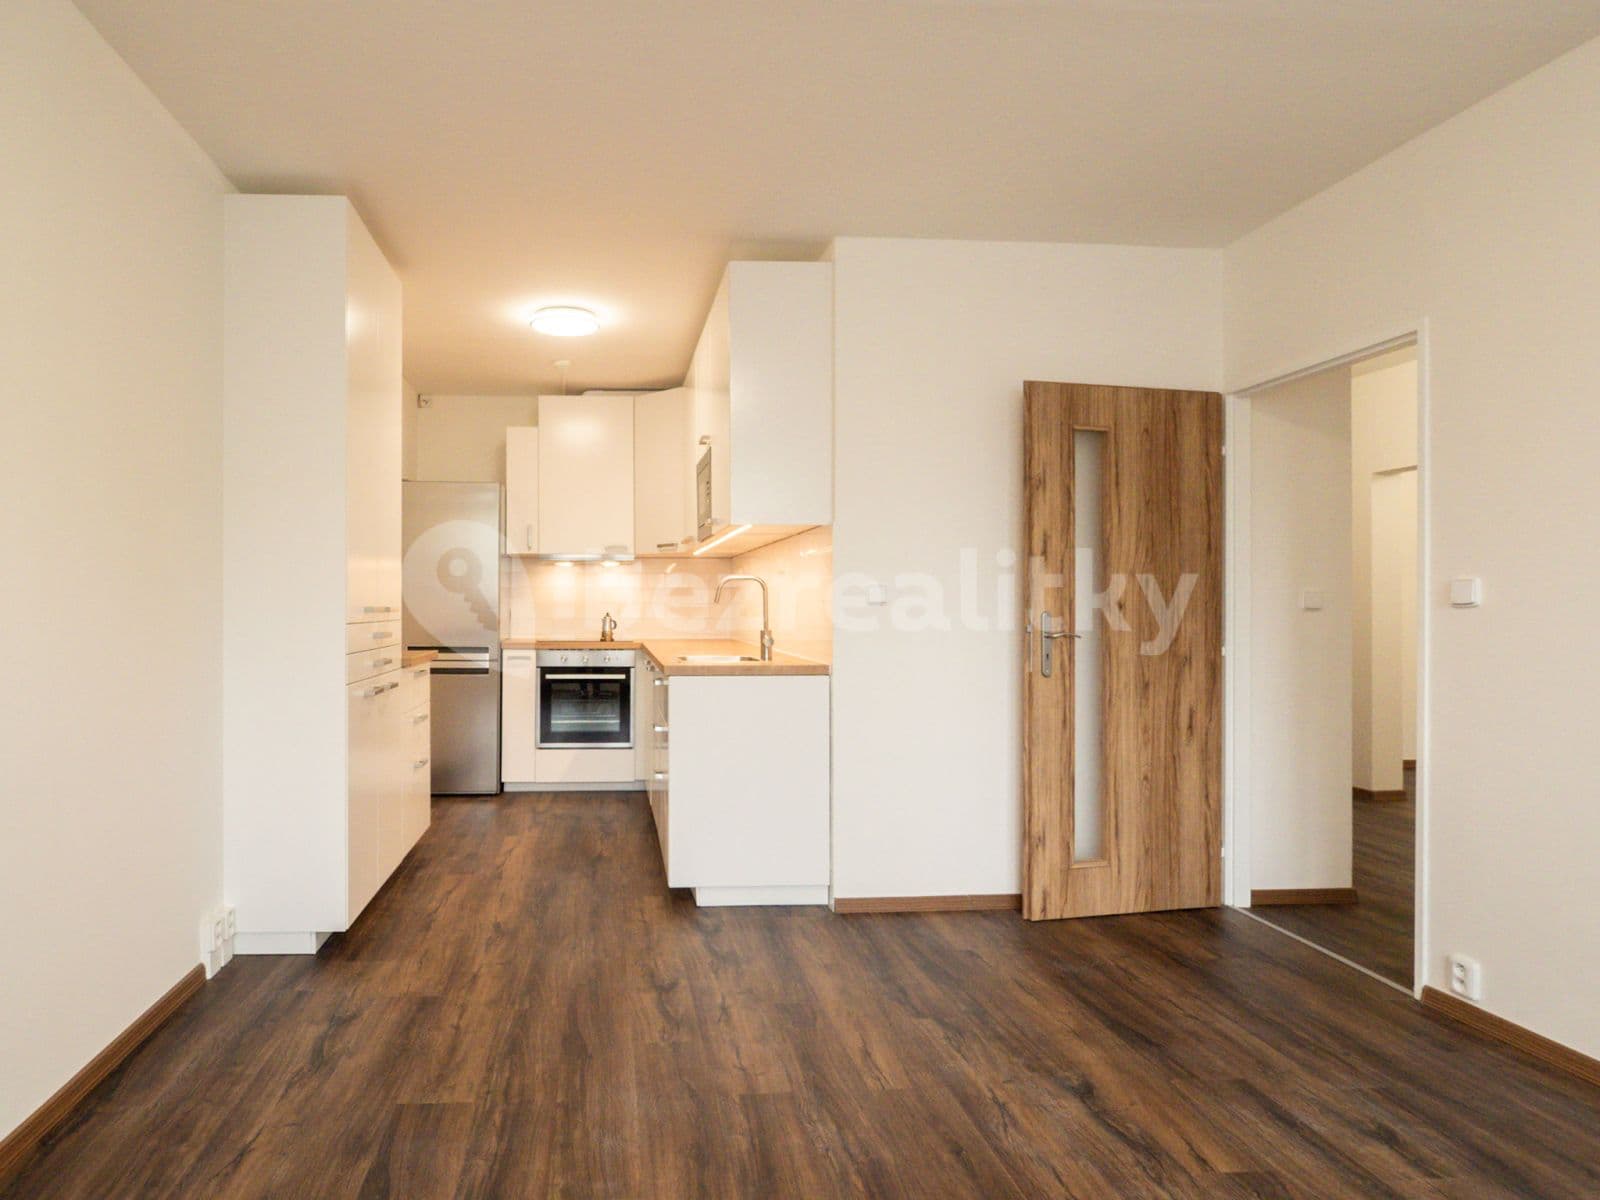 2 bedroom with open-plan kitchen flat to rent, 64 m², Plickova, Prague, Prague